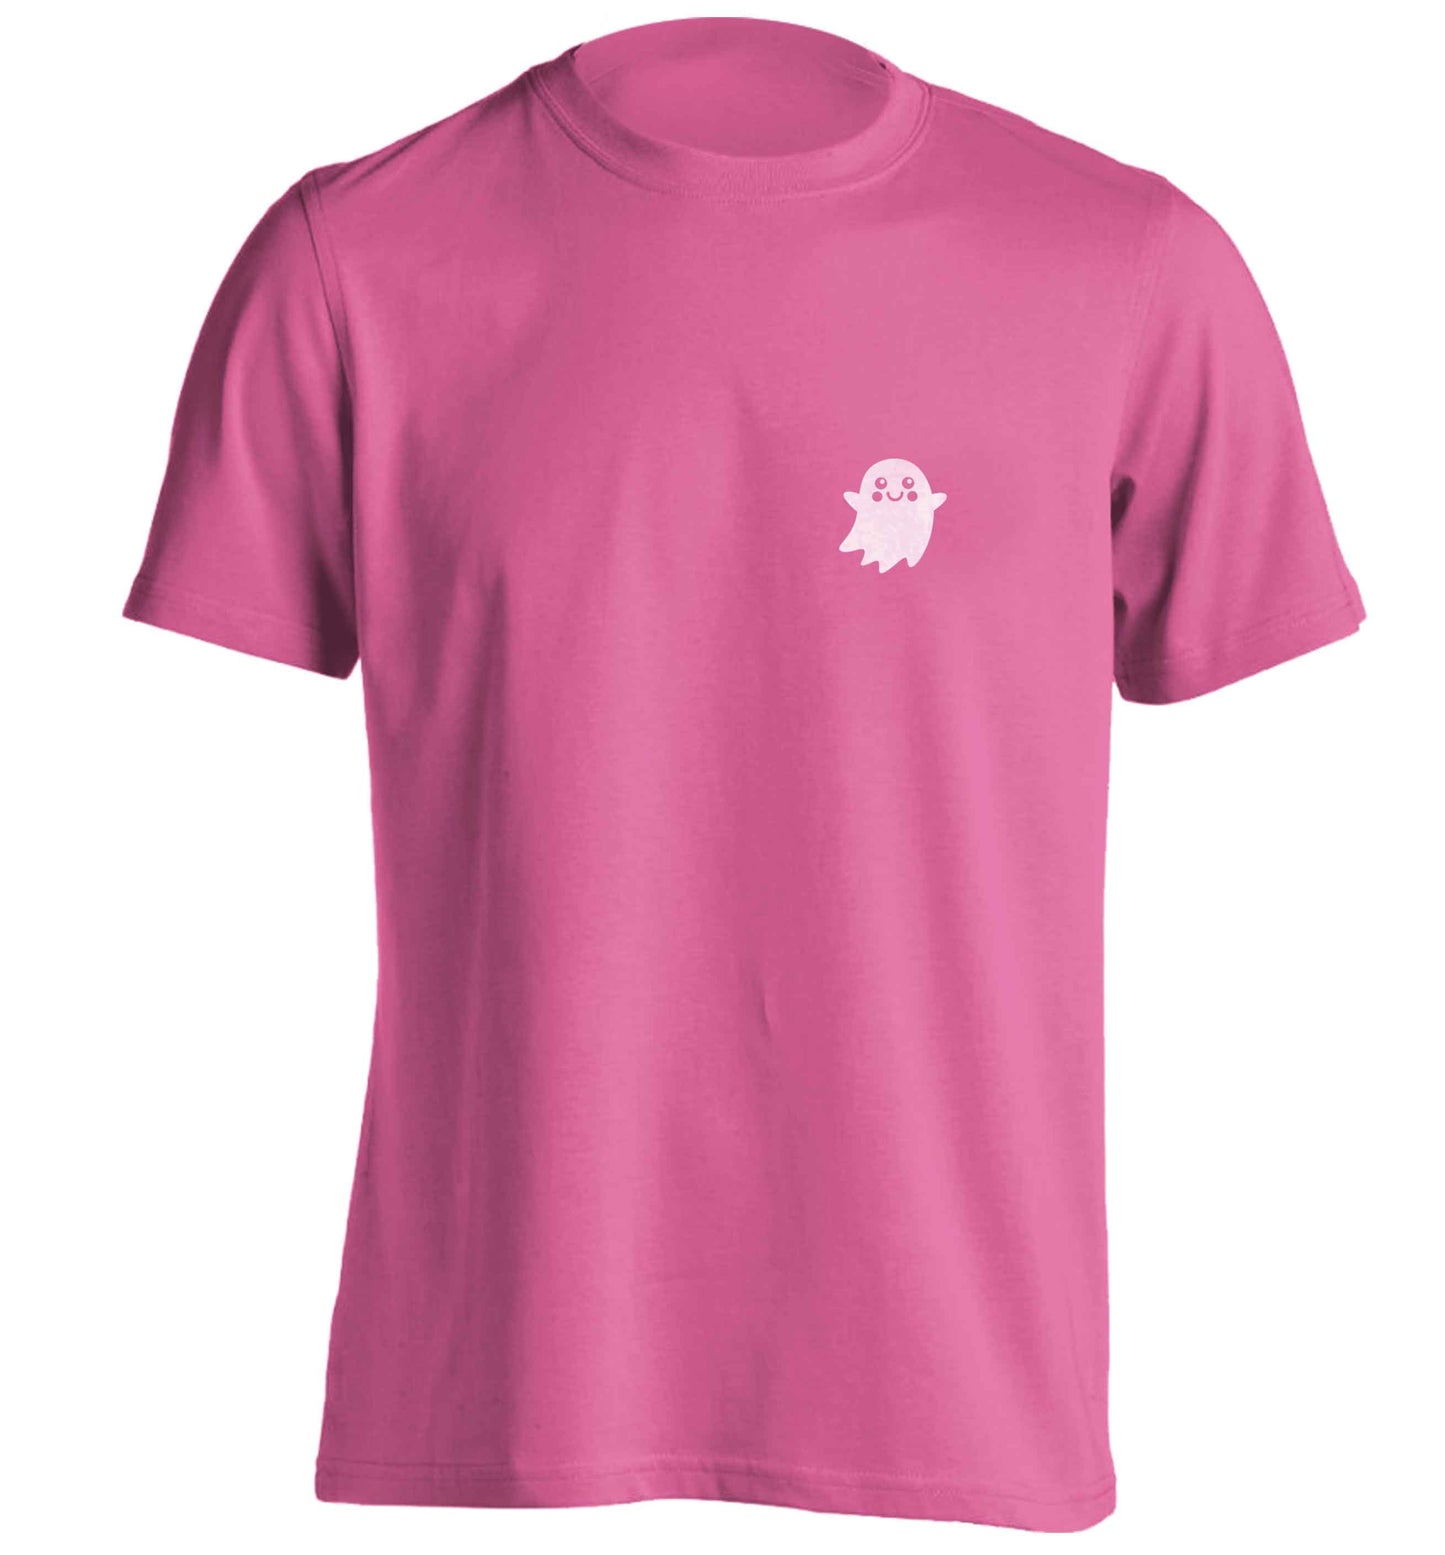 Pocket ghost adults unisex pink Tshirt 2XL